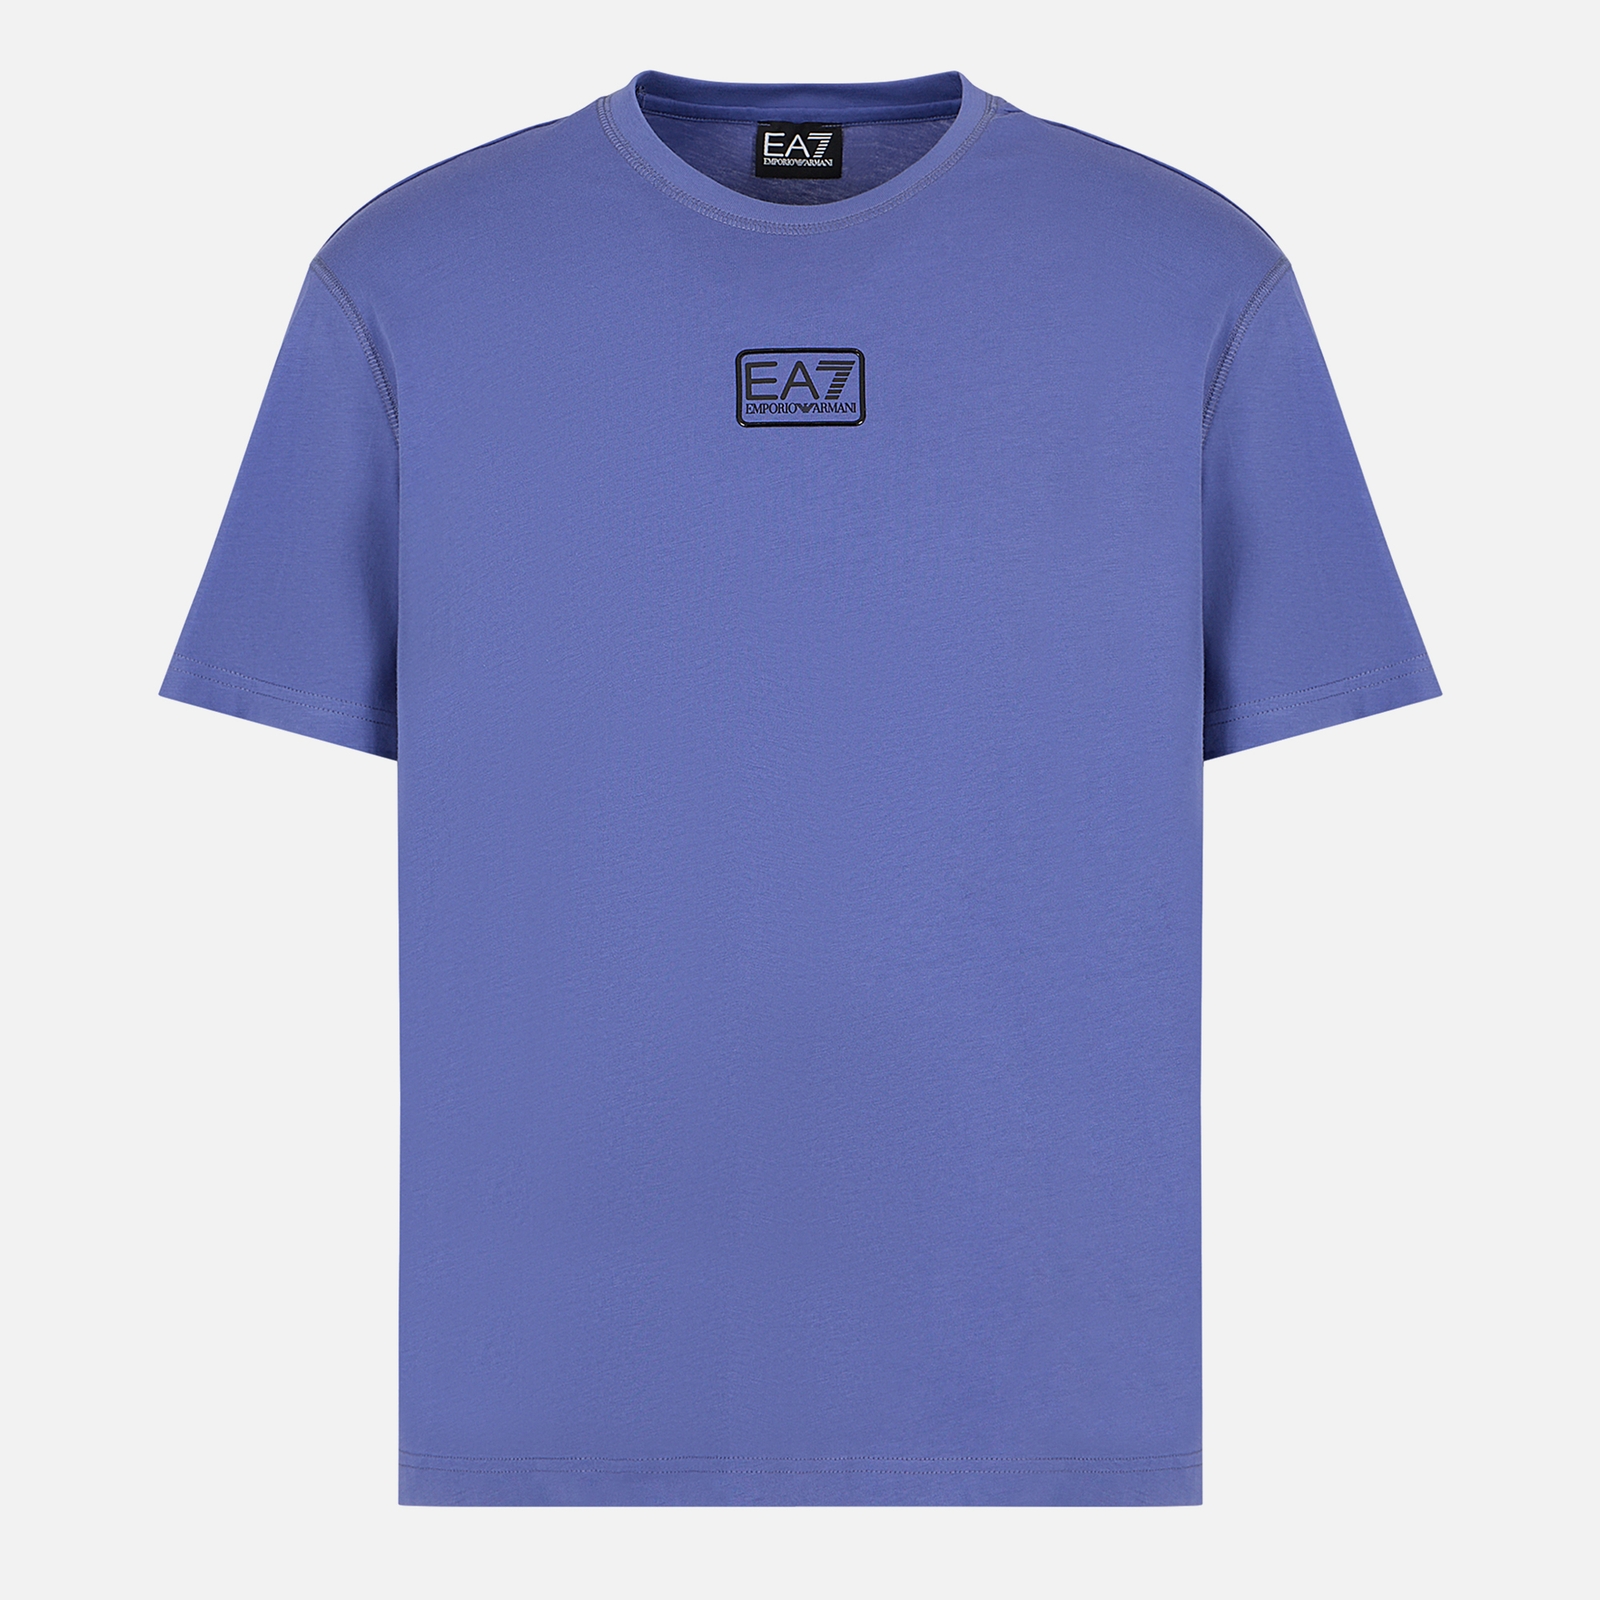 EA7 Core ID Box Logo Cotton T-Shirt